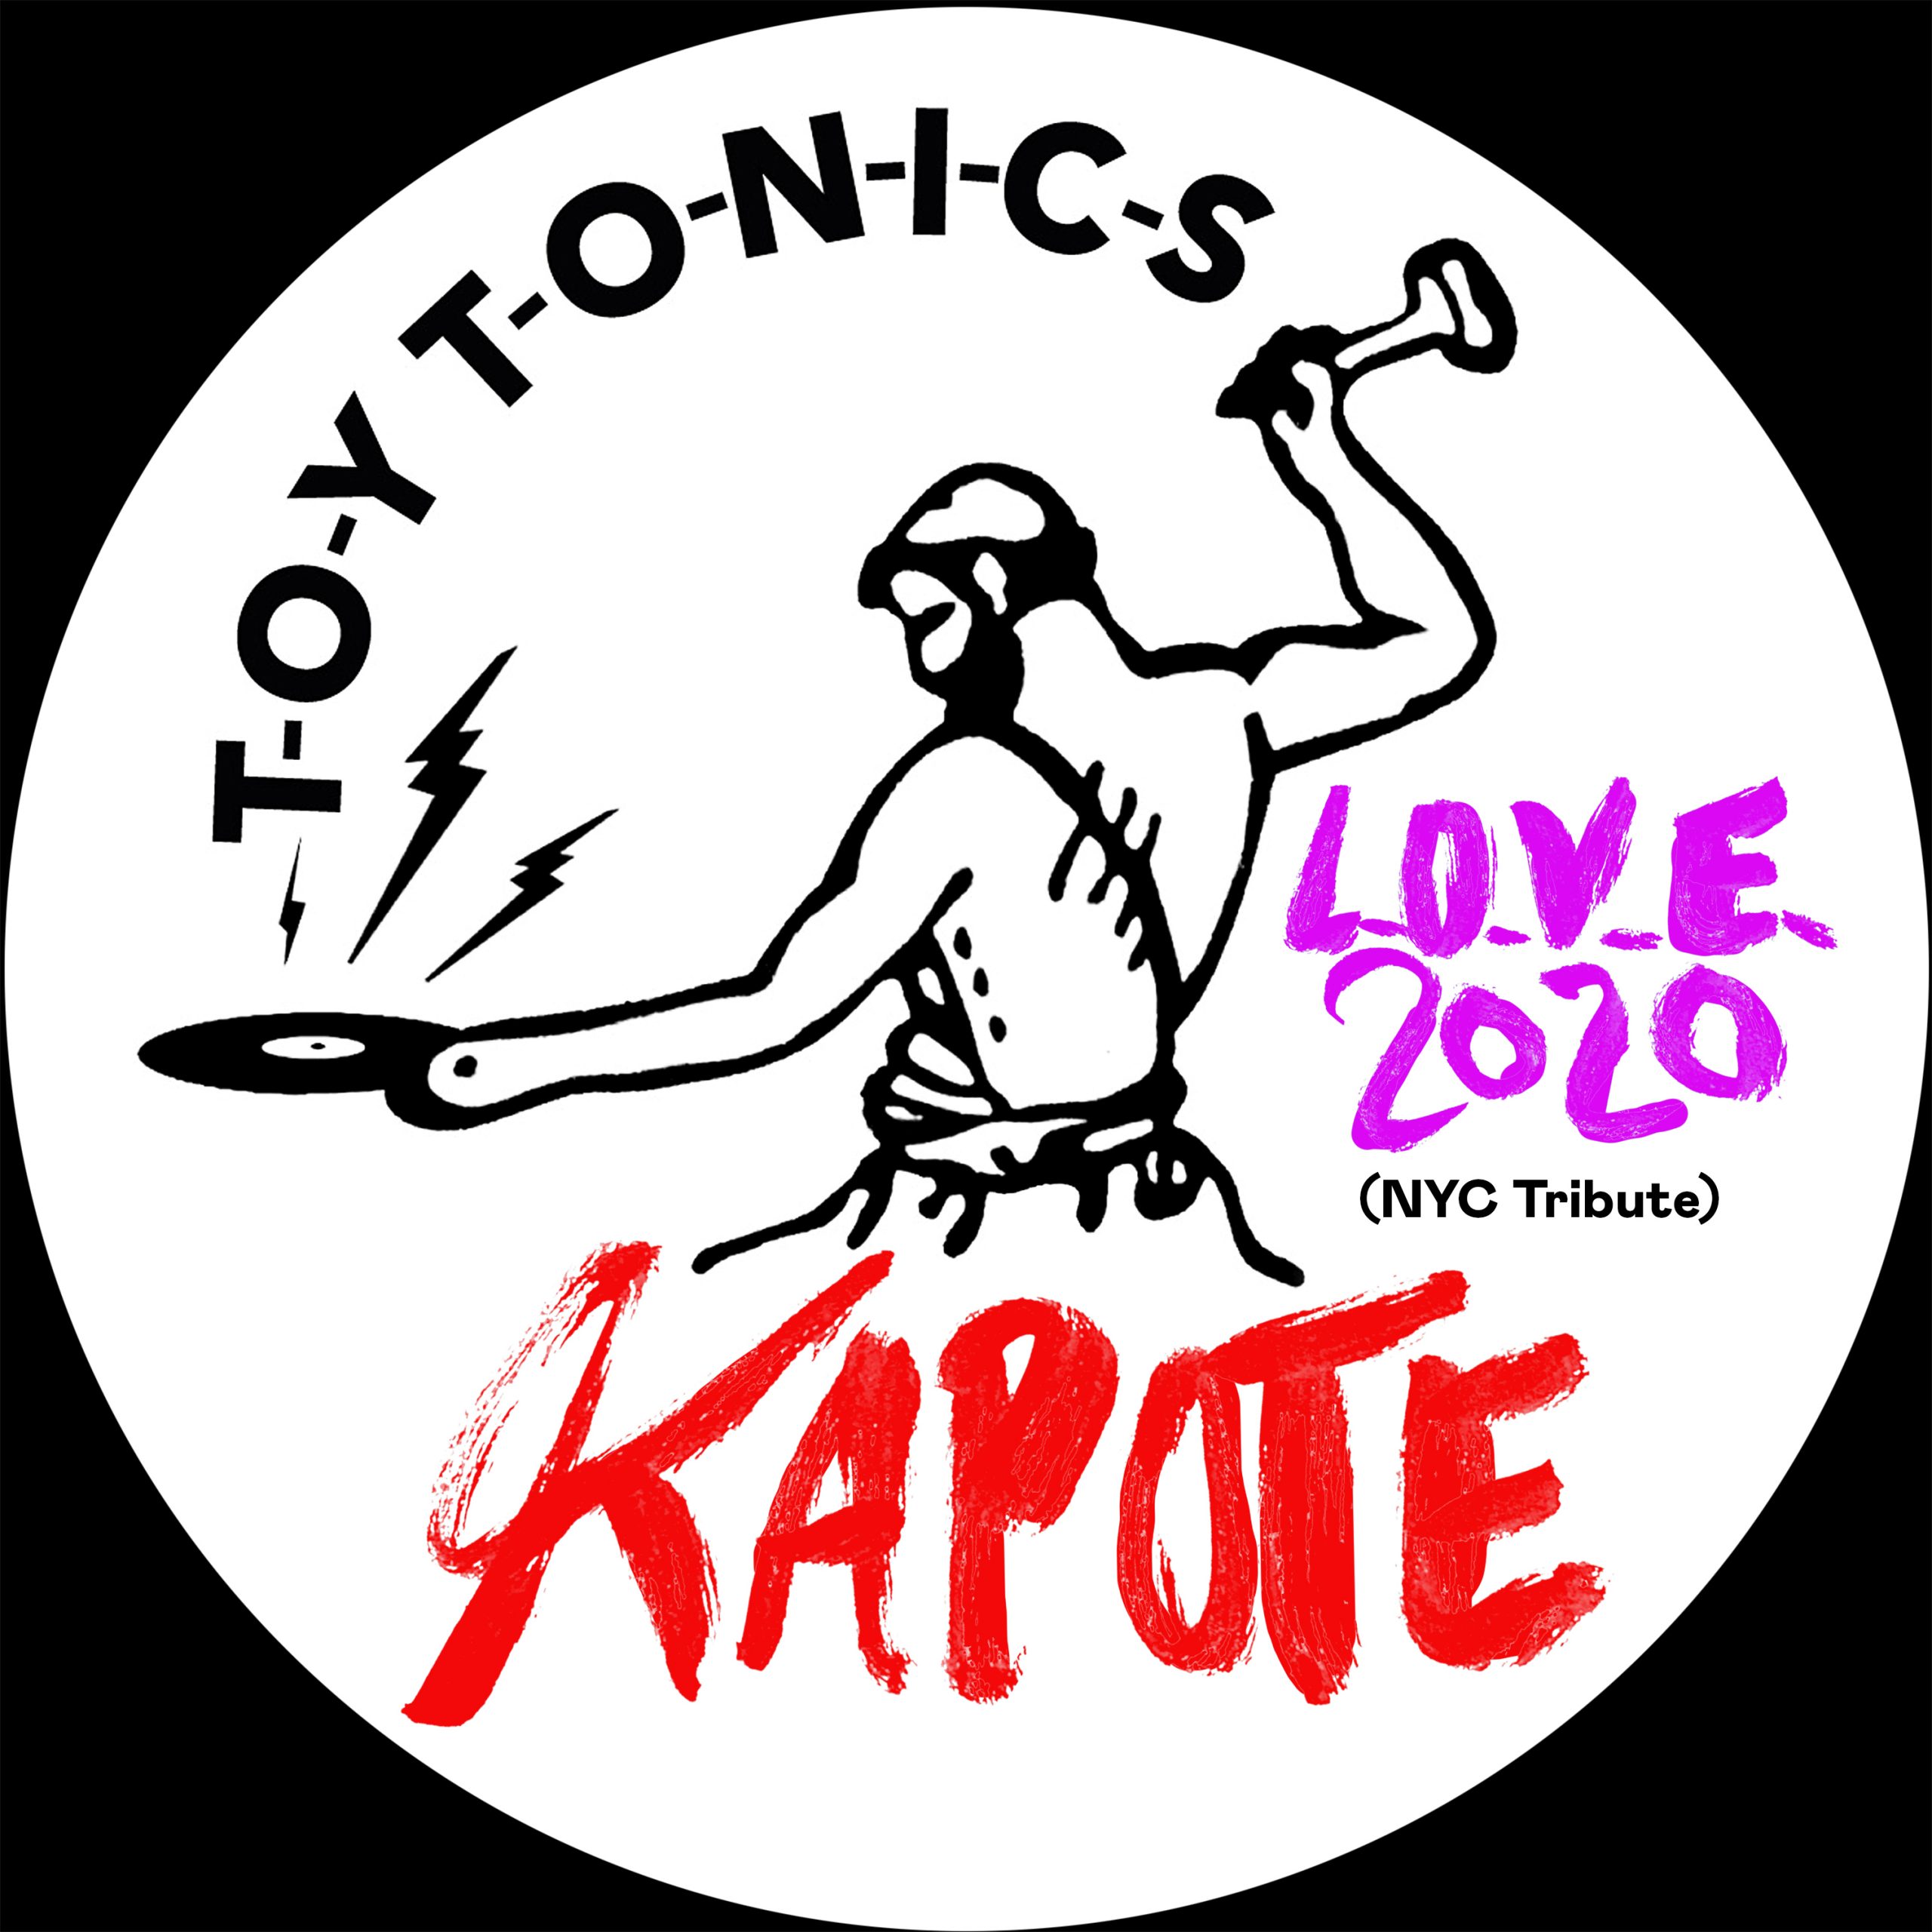 Kapote - L.O.V.E. 2020 (NYC Tribute) [TOYT090S]